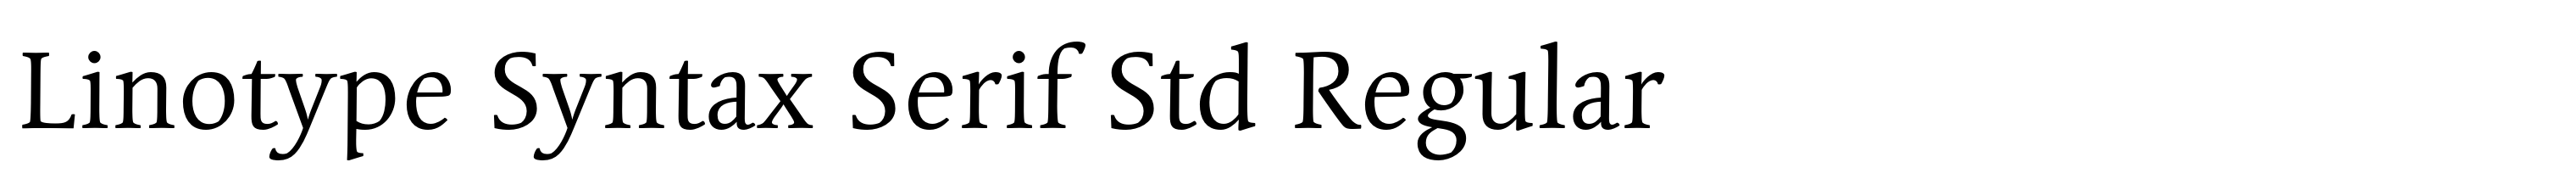 Linotype Syntax Serif Std Regular